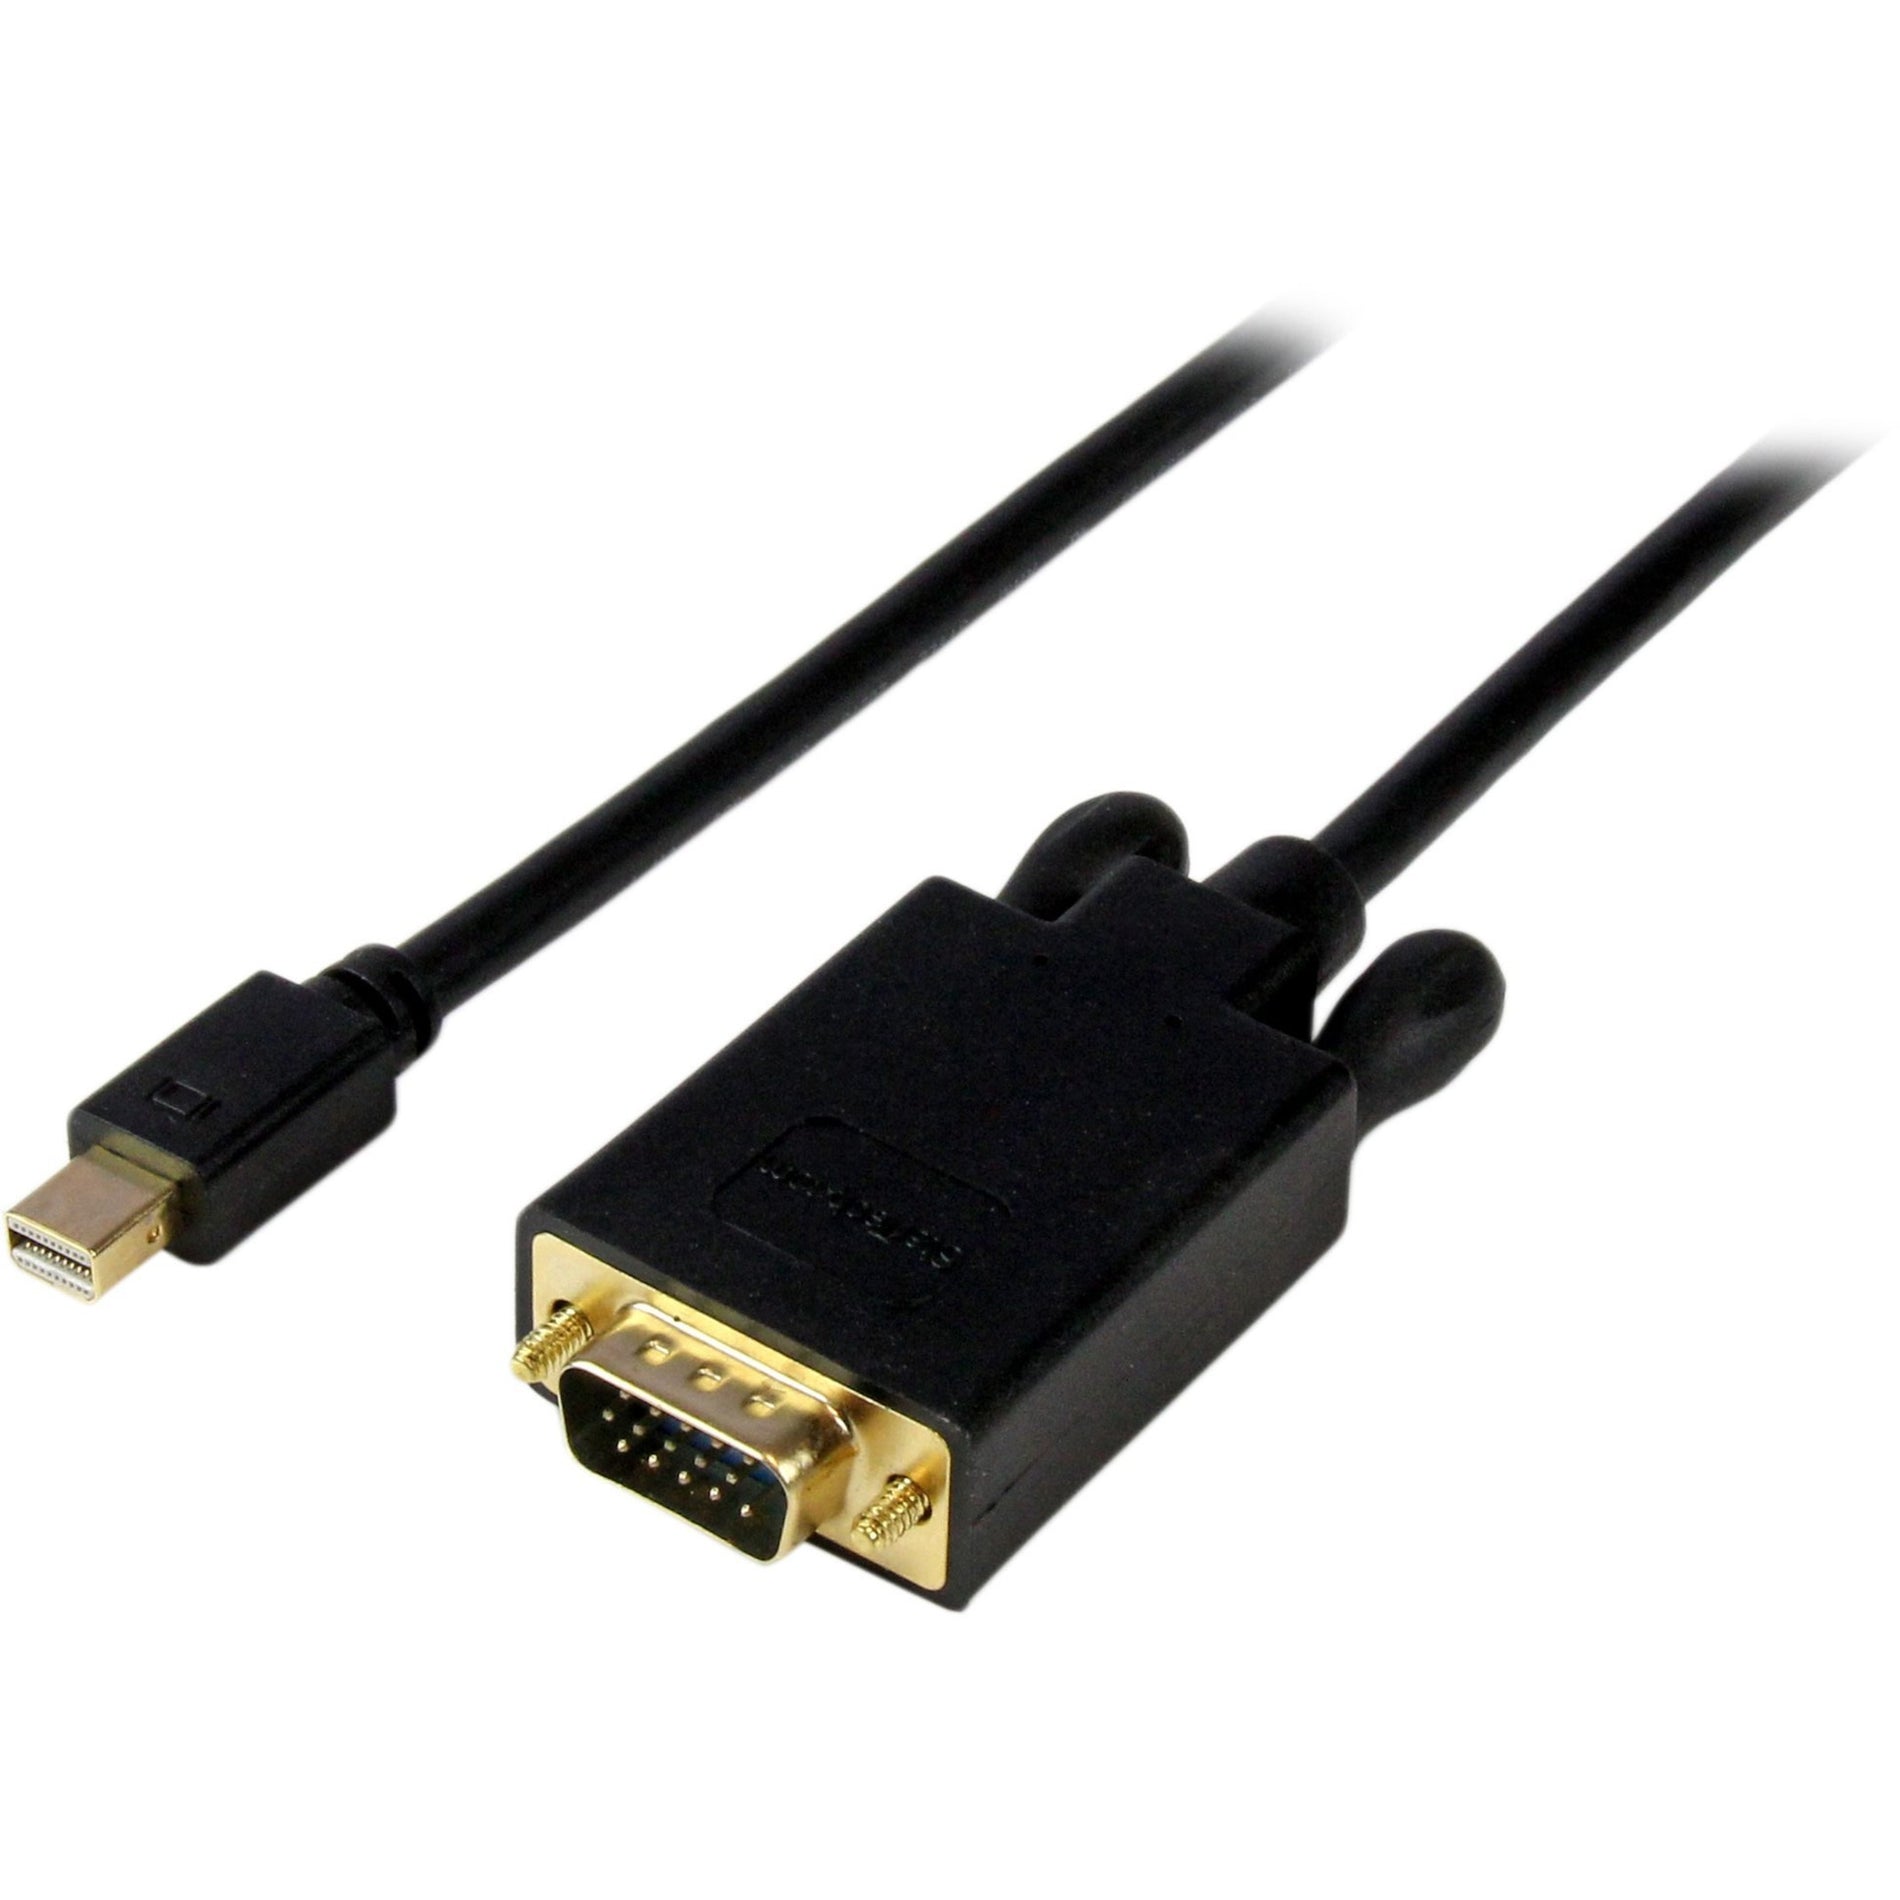 StarTech.com MDP2VGAMM3B Mini DisplayPort to VGA Adapter Converter Cable - Black, 3 ft, 1920x1200